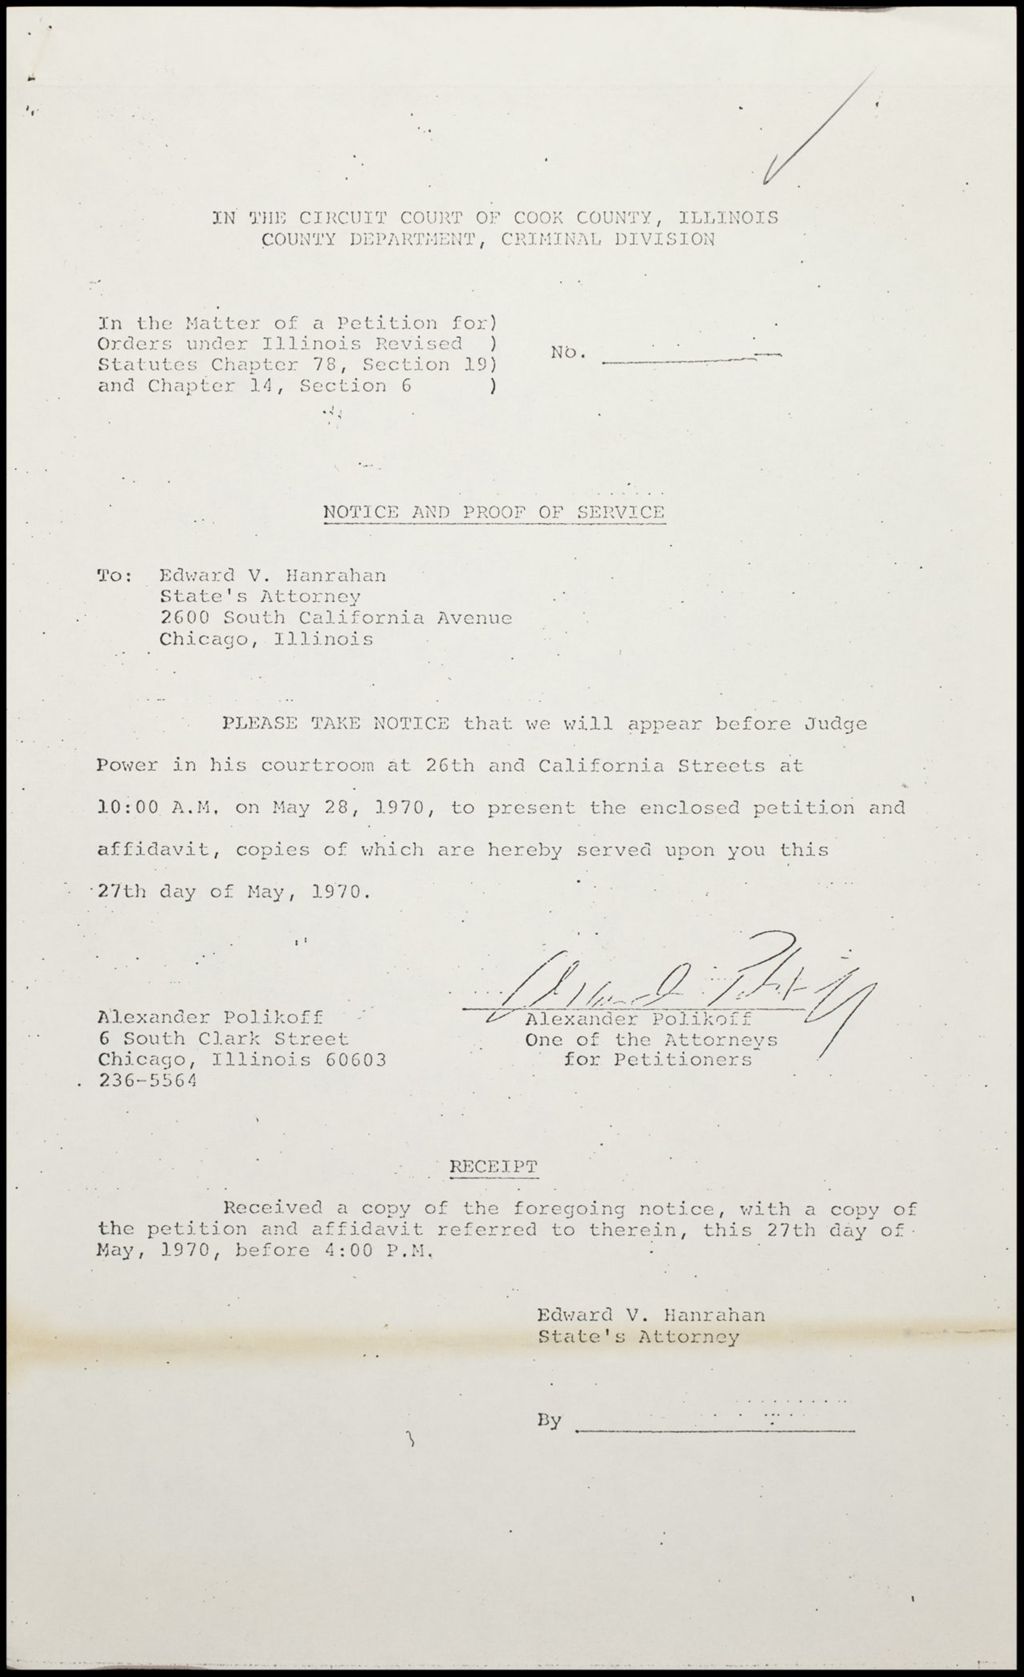 Miniature of Legal Petition, 1970 (Folder IV-1309)